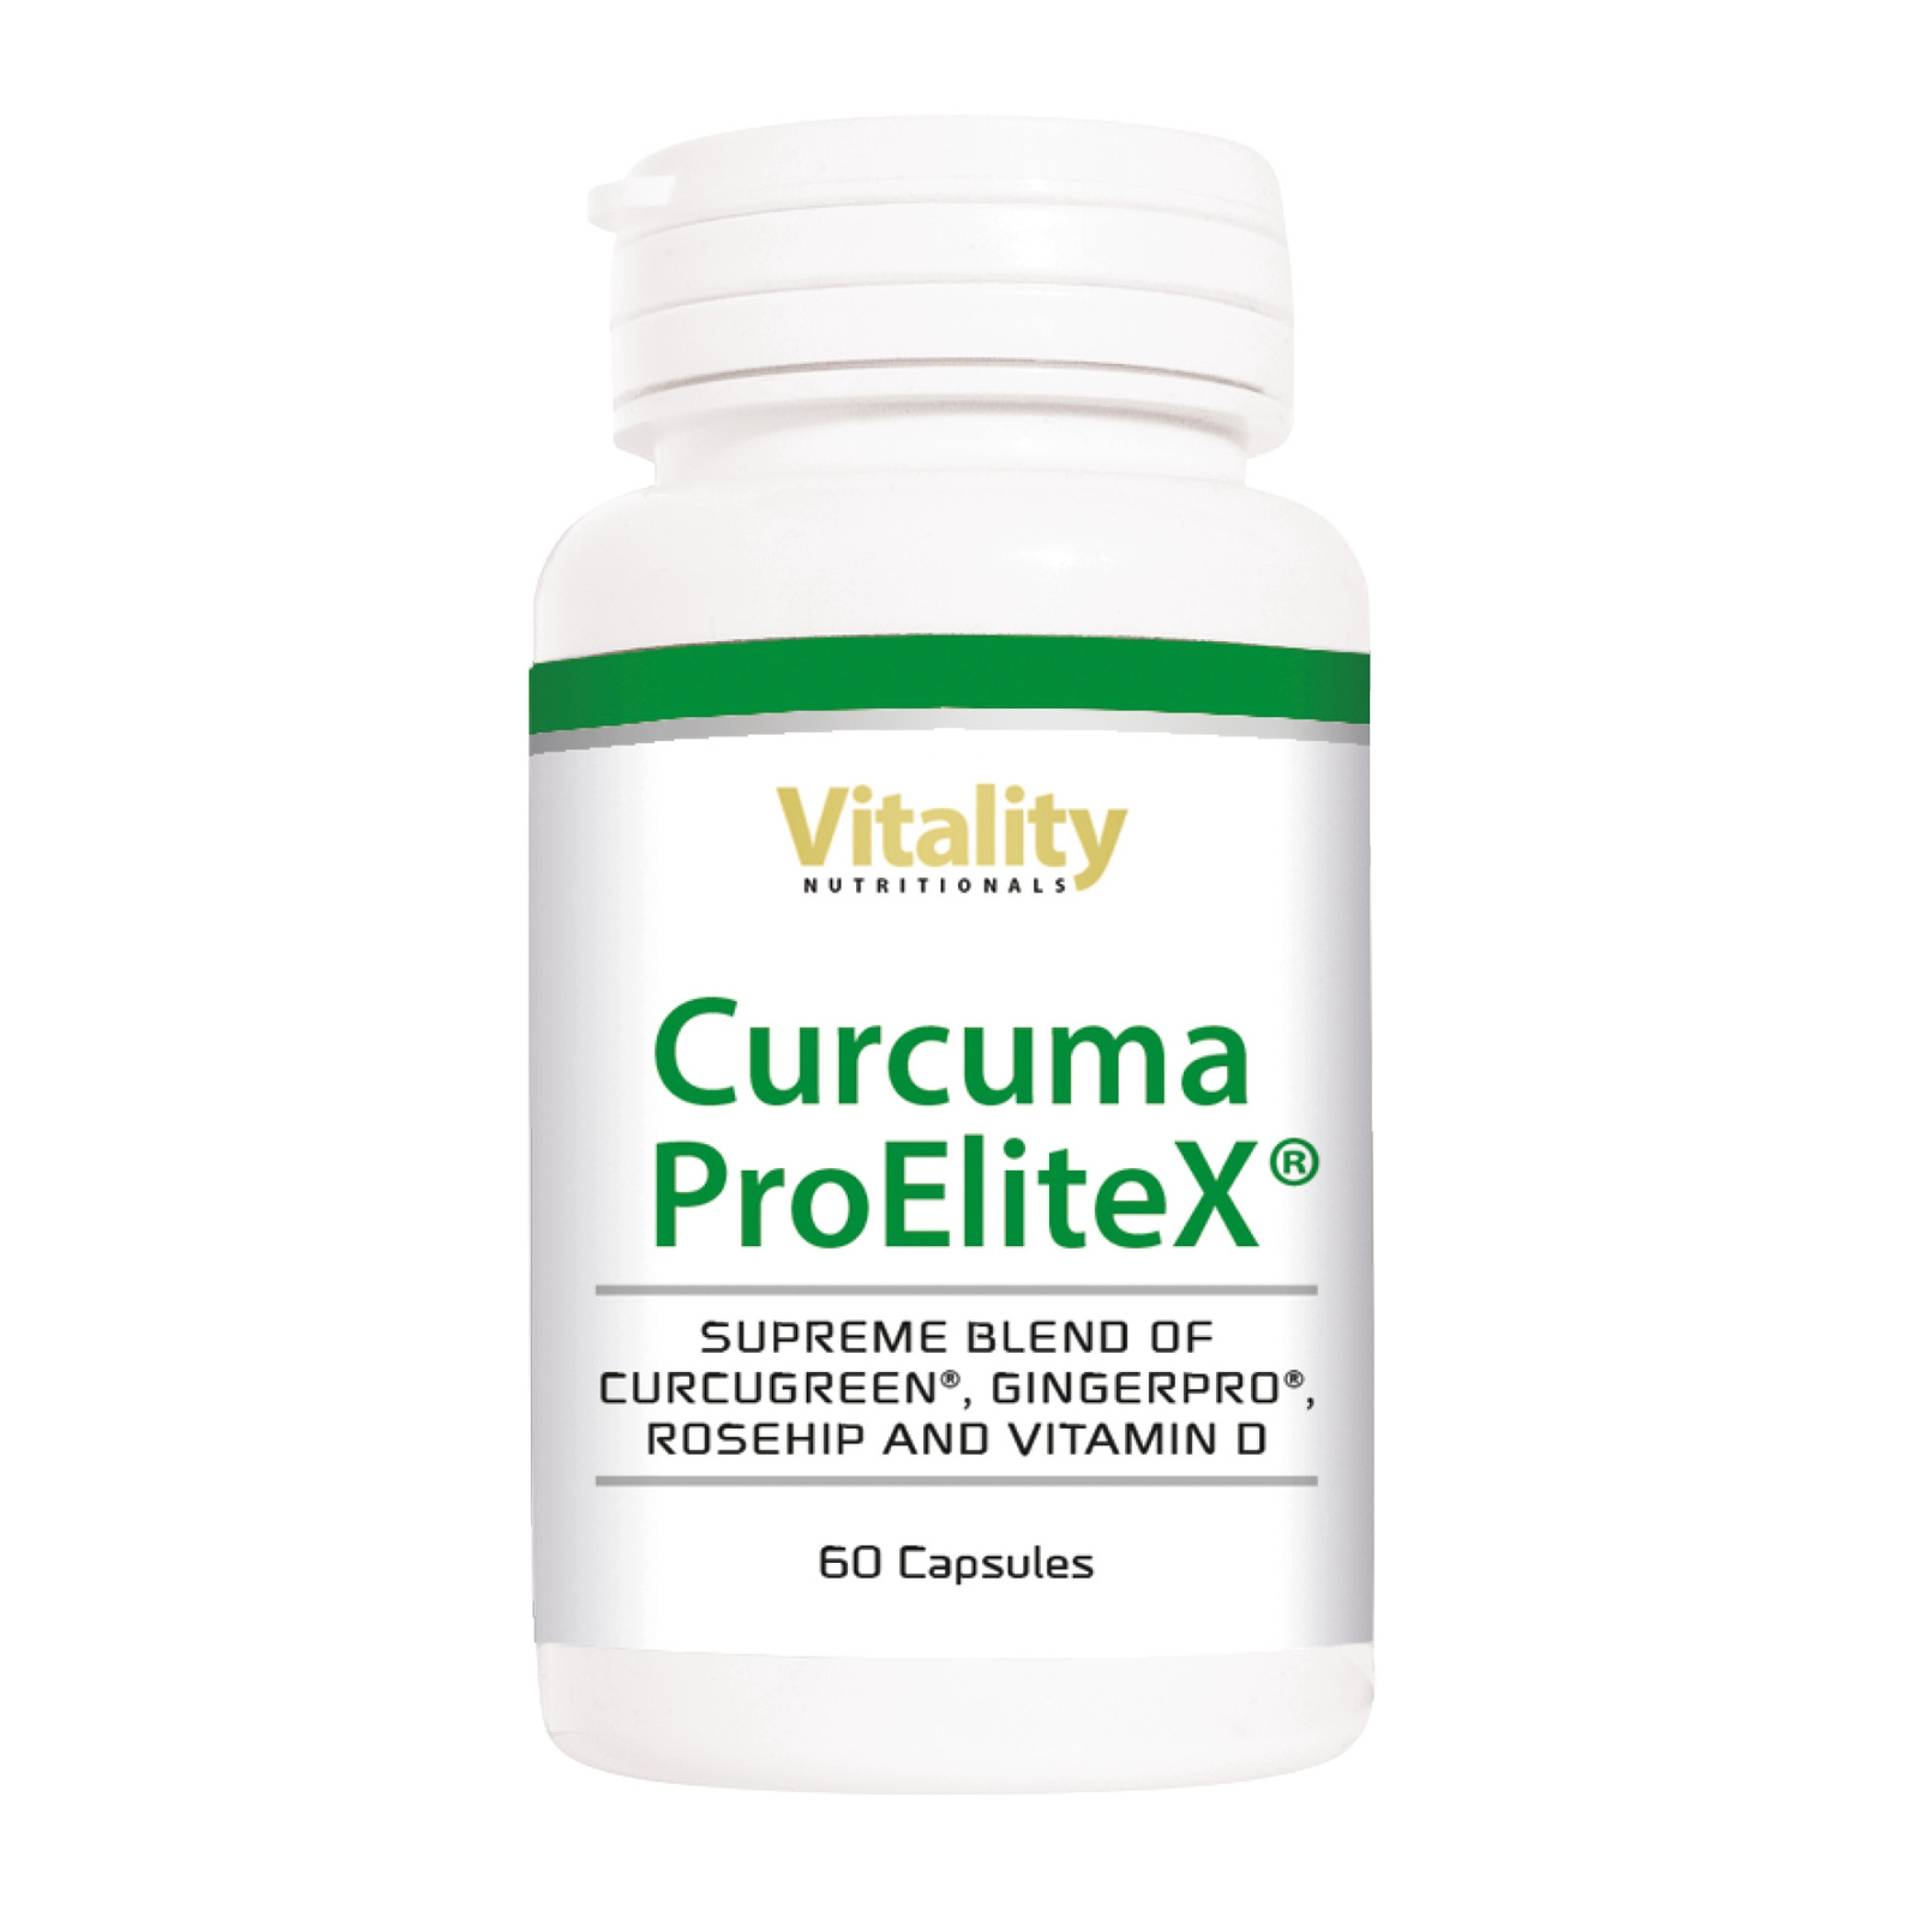 Curcuma-ProEliteX-500_29,7g_60capsules_Packshot-Dose_1600x1600px_72dpi_20230710.jpg